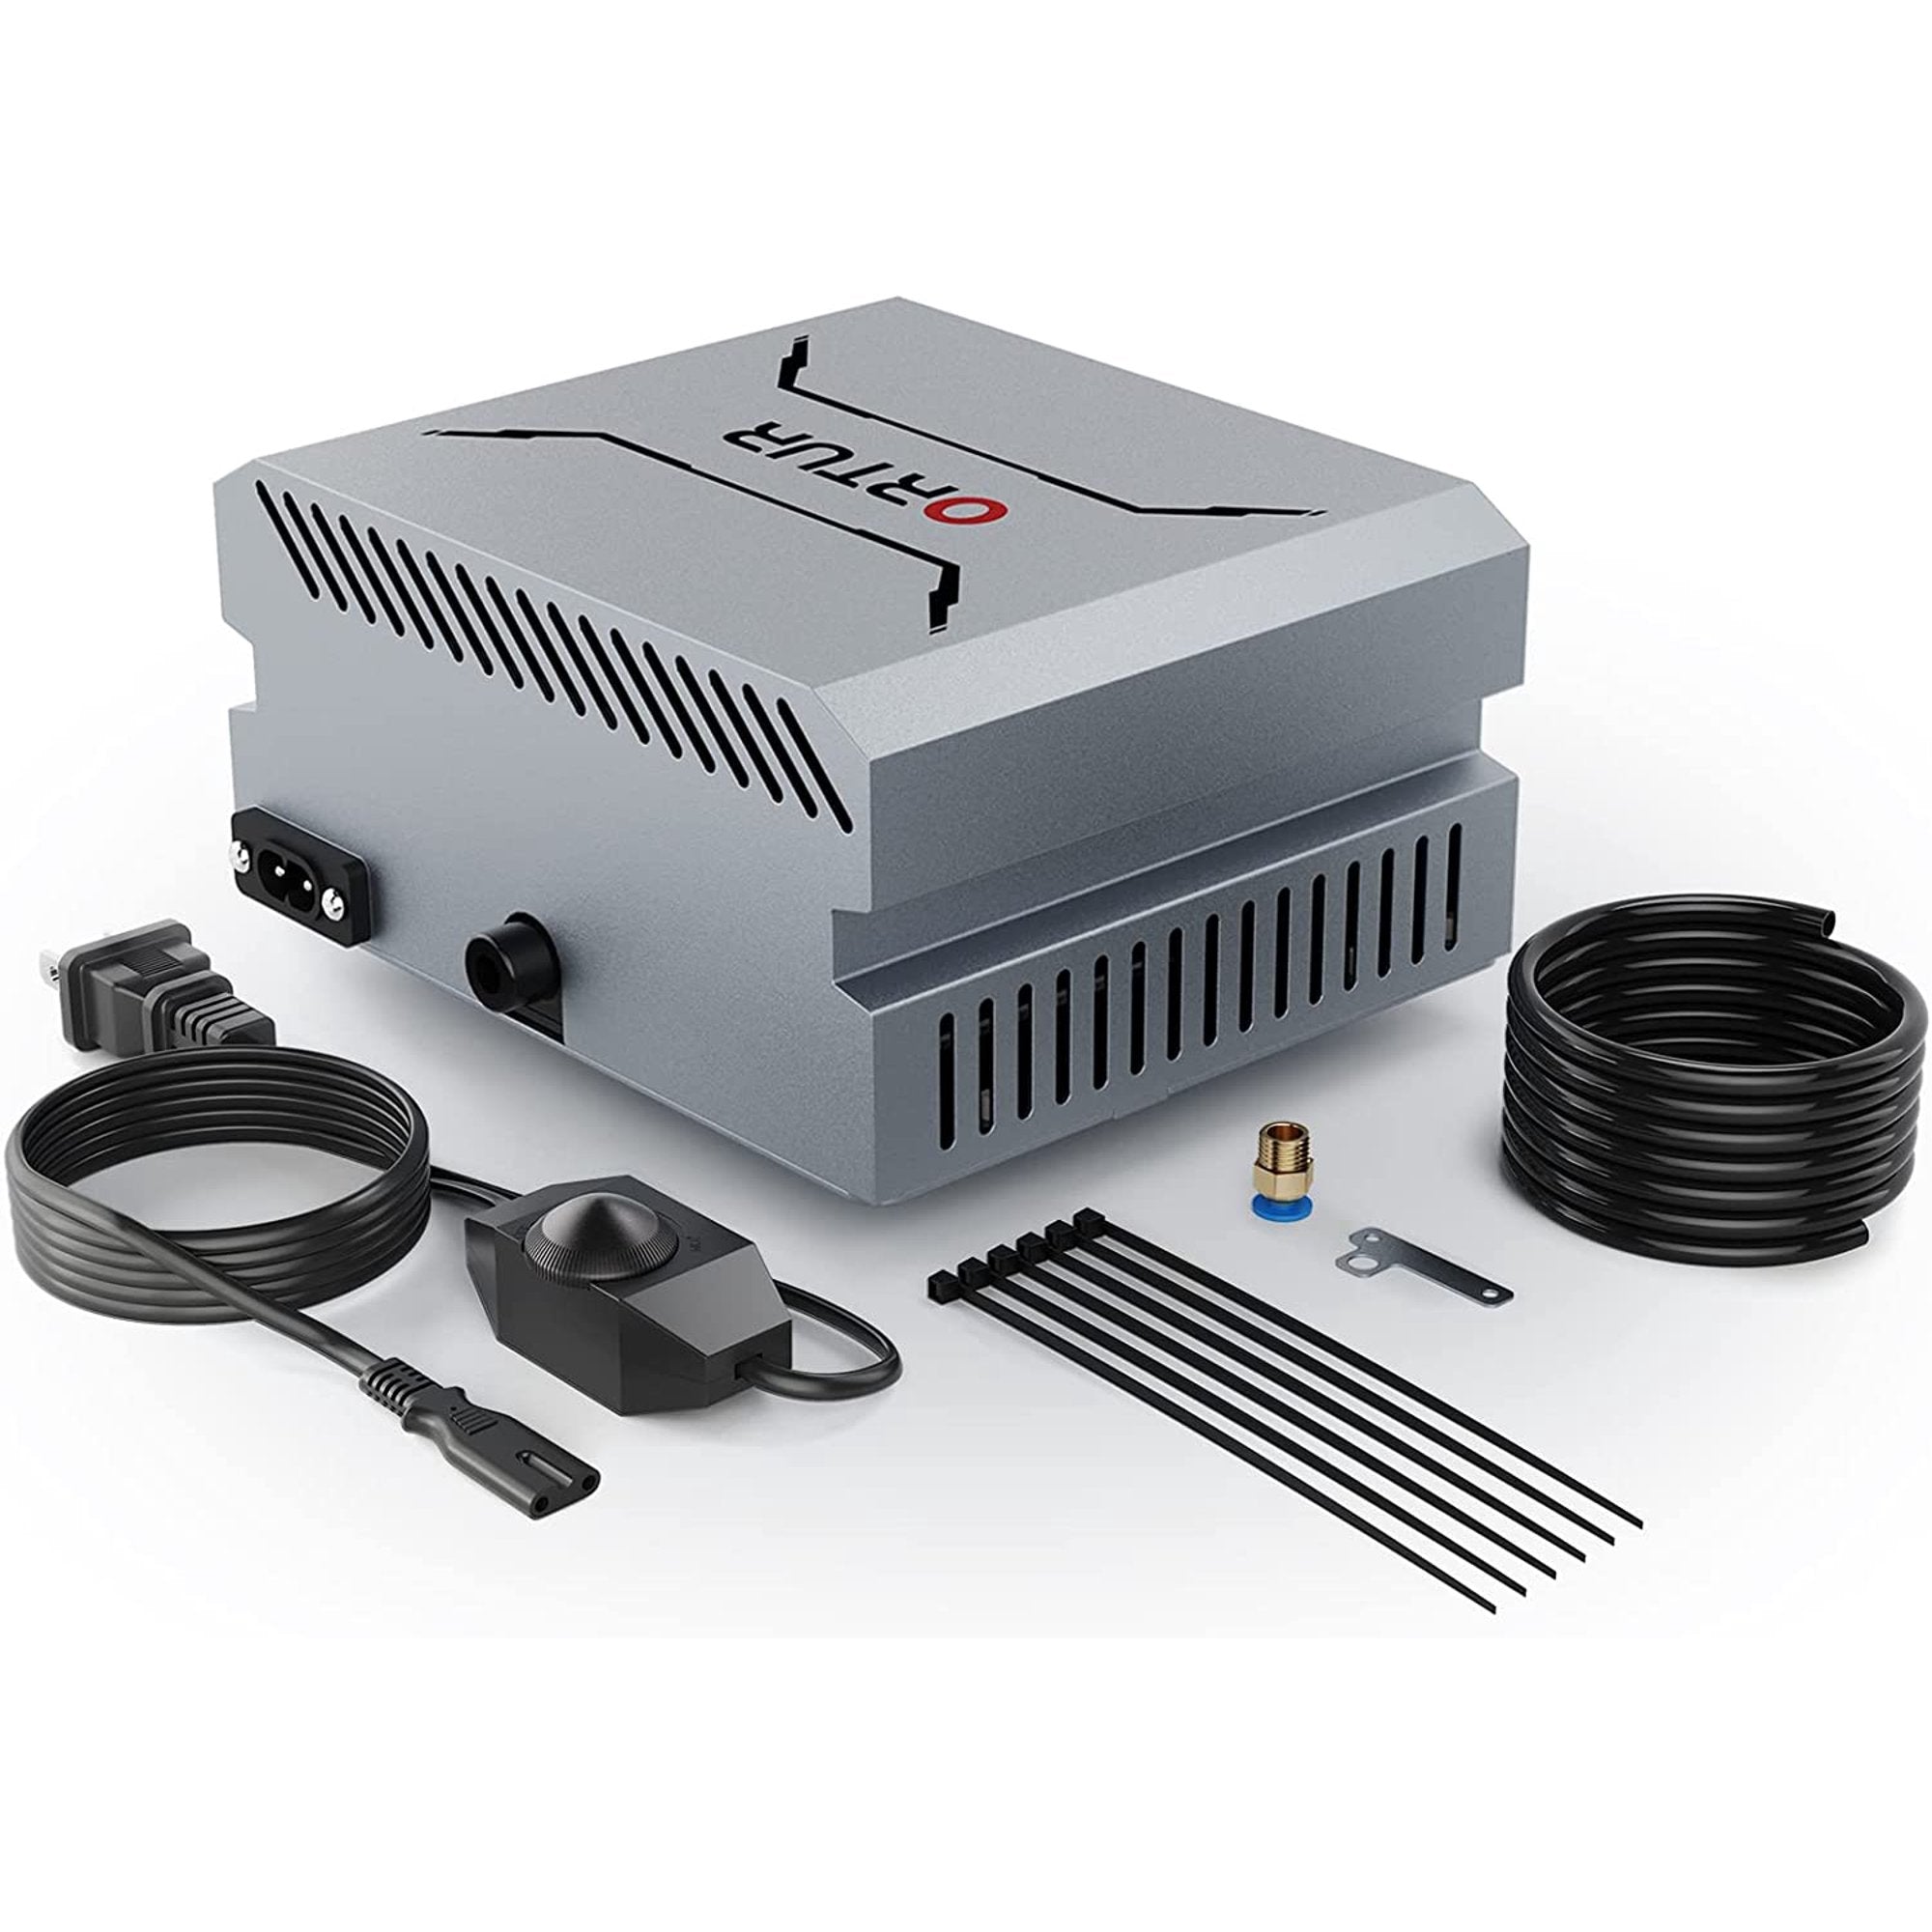  ZBAITU Air Assist Pump for Laser Engraver Cutter, 30L